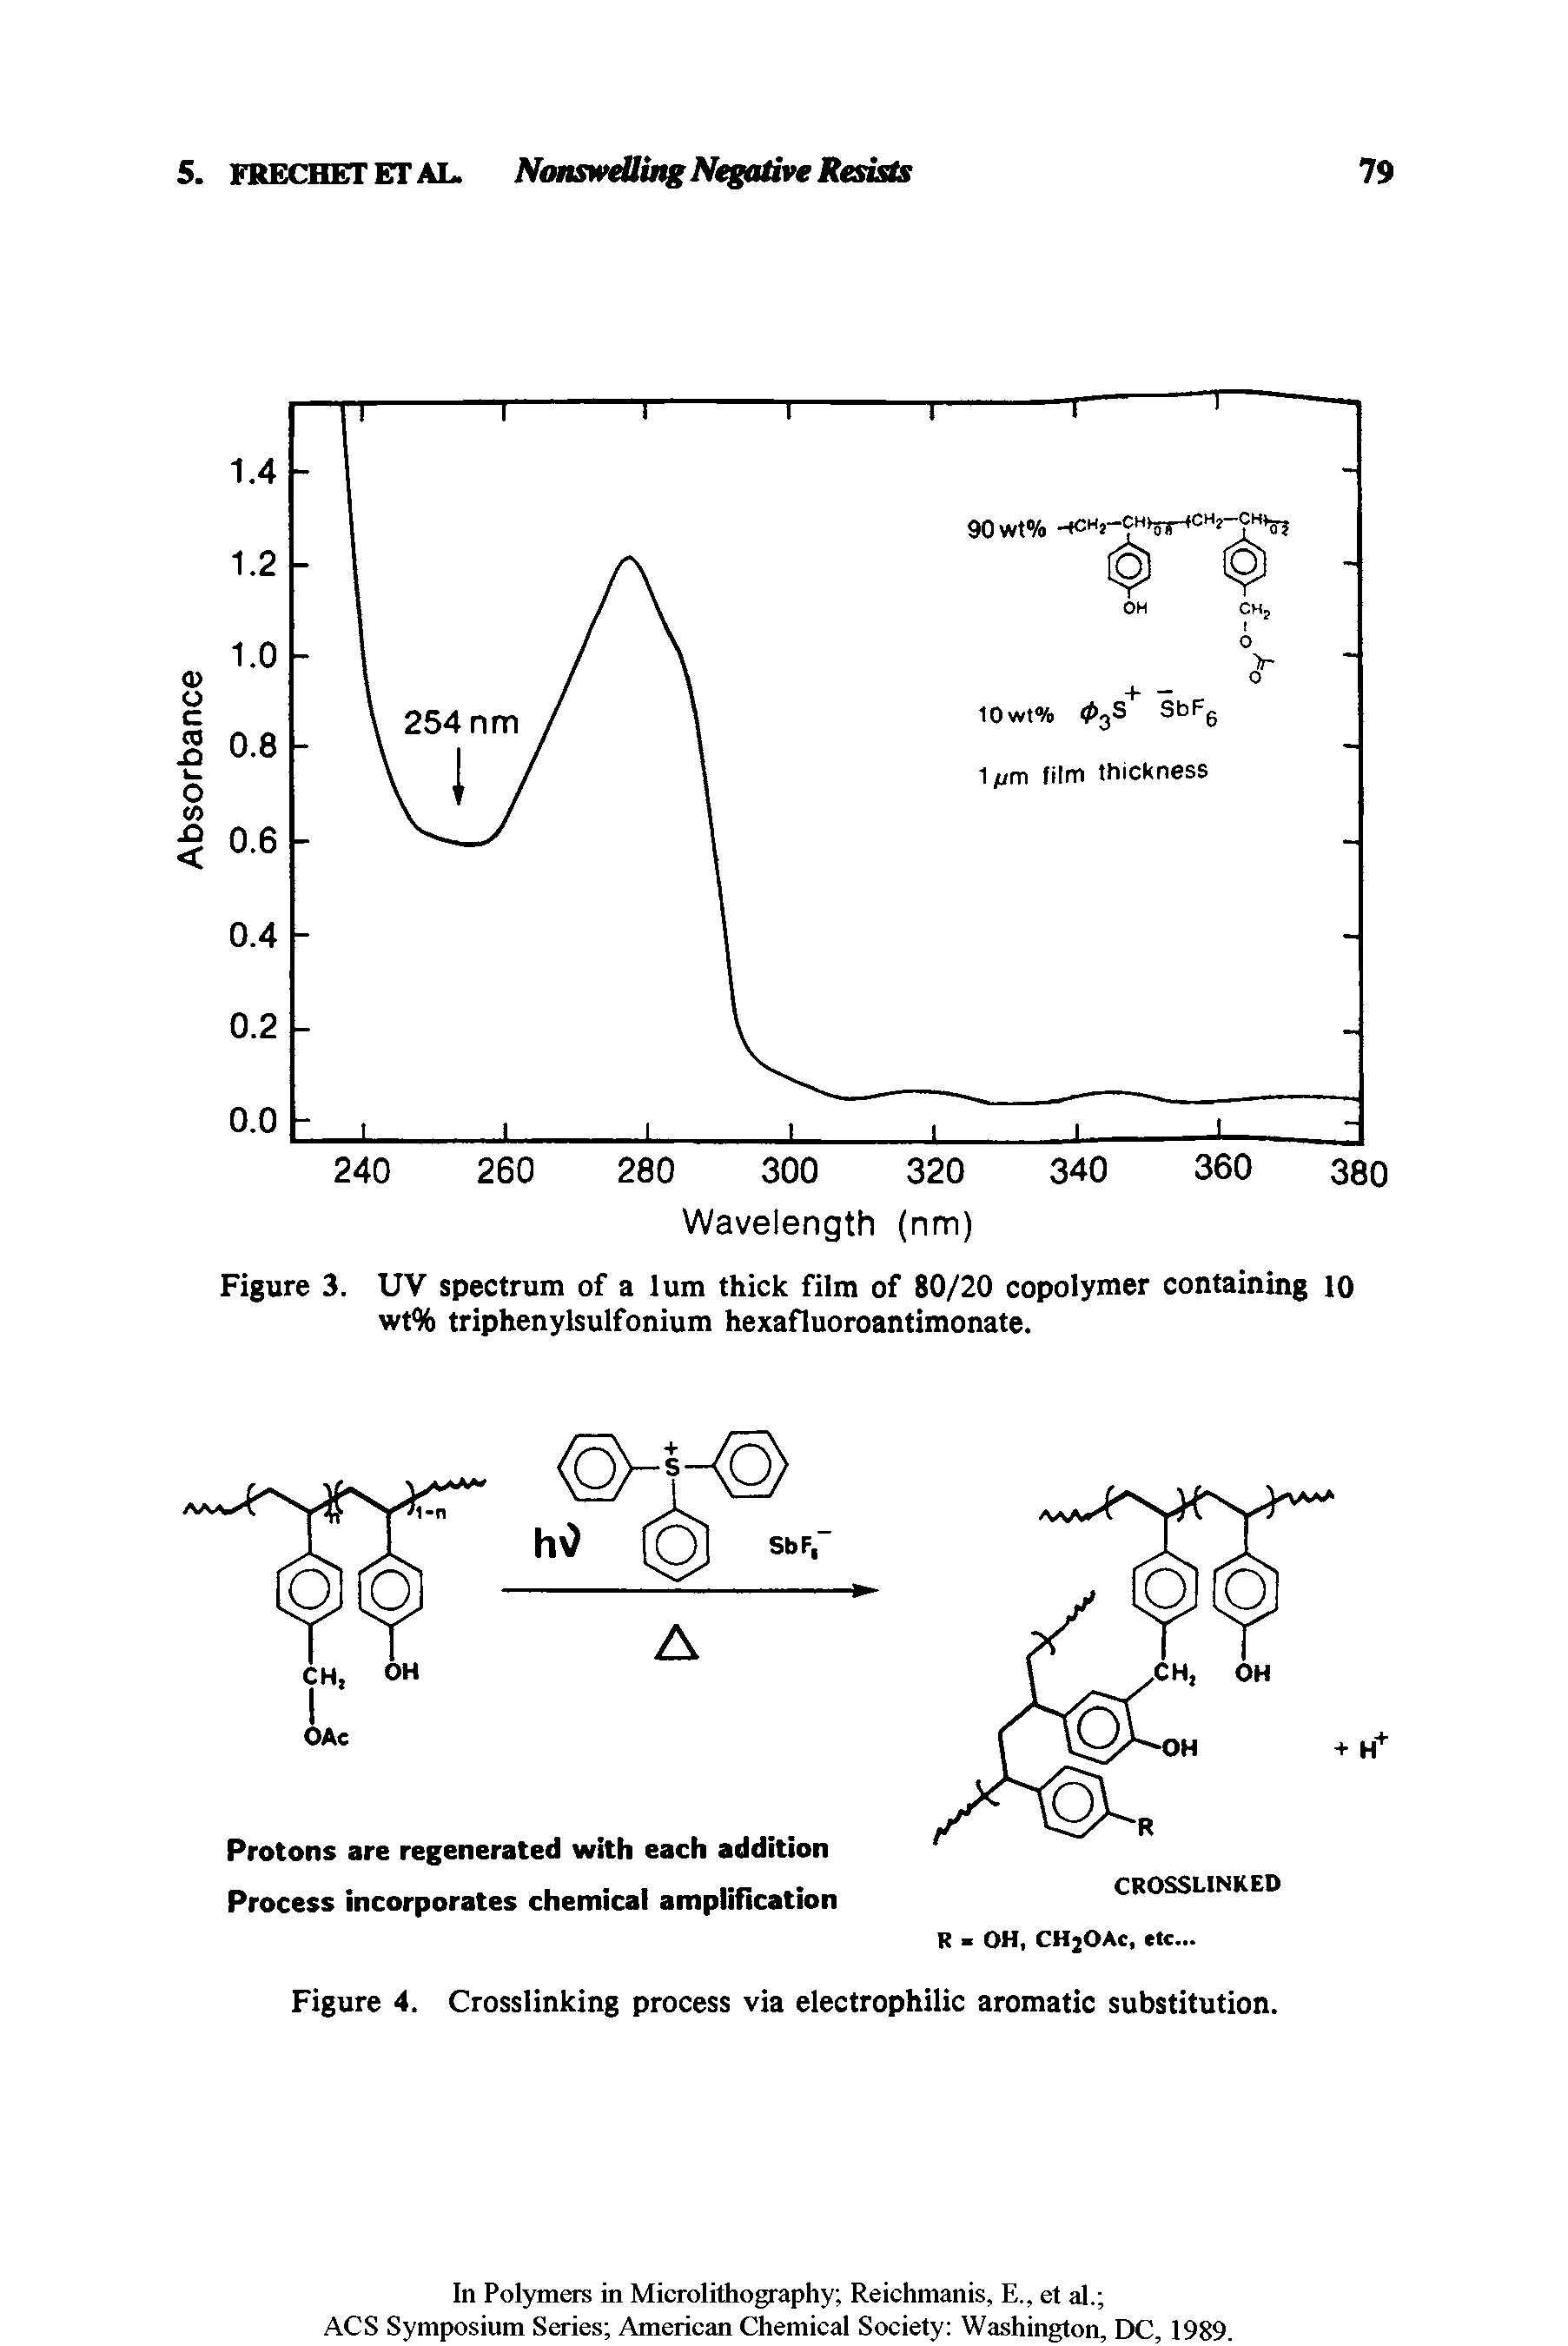 Figure 4. Crosslinking process via electrophilic aromatic substitution.